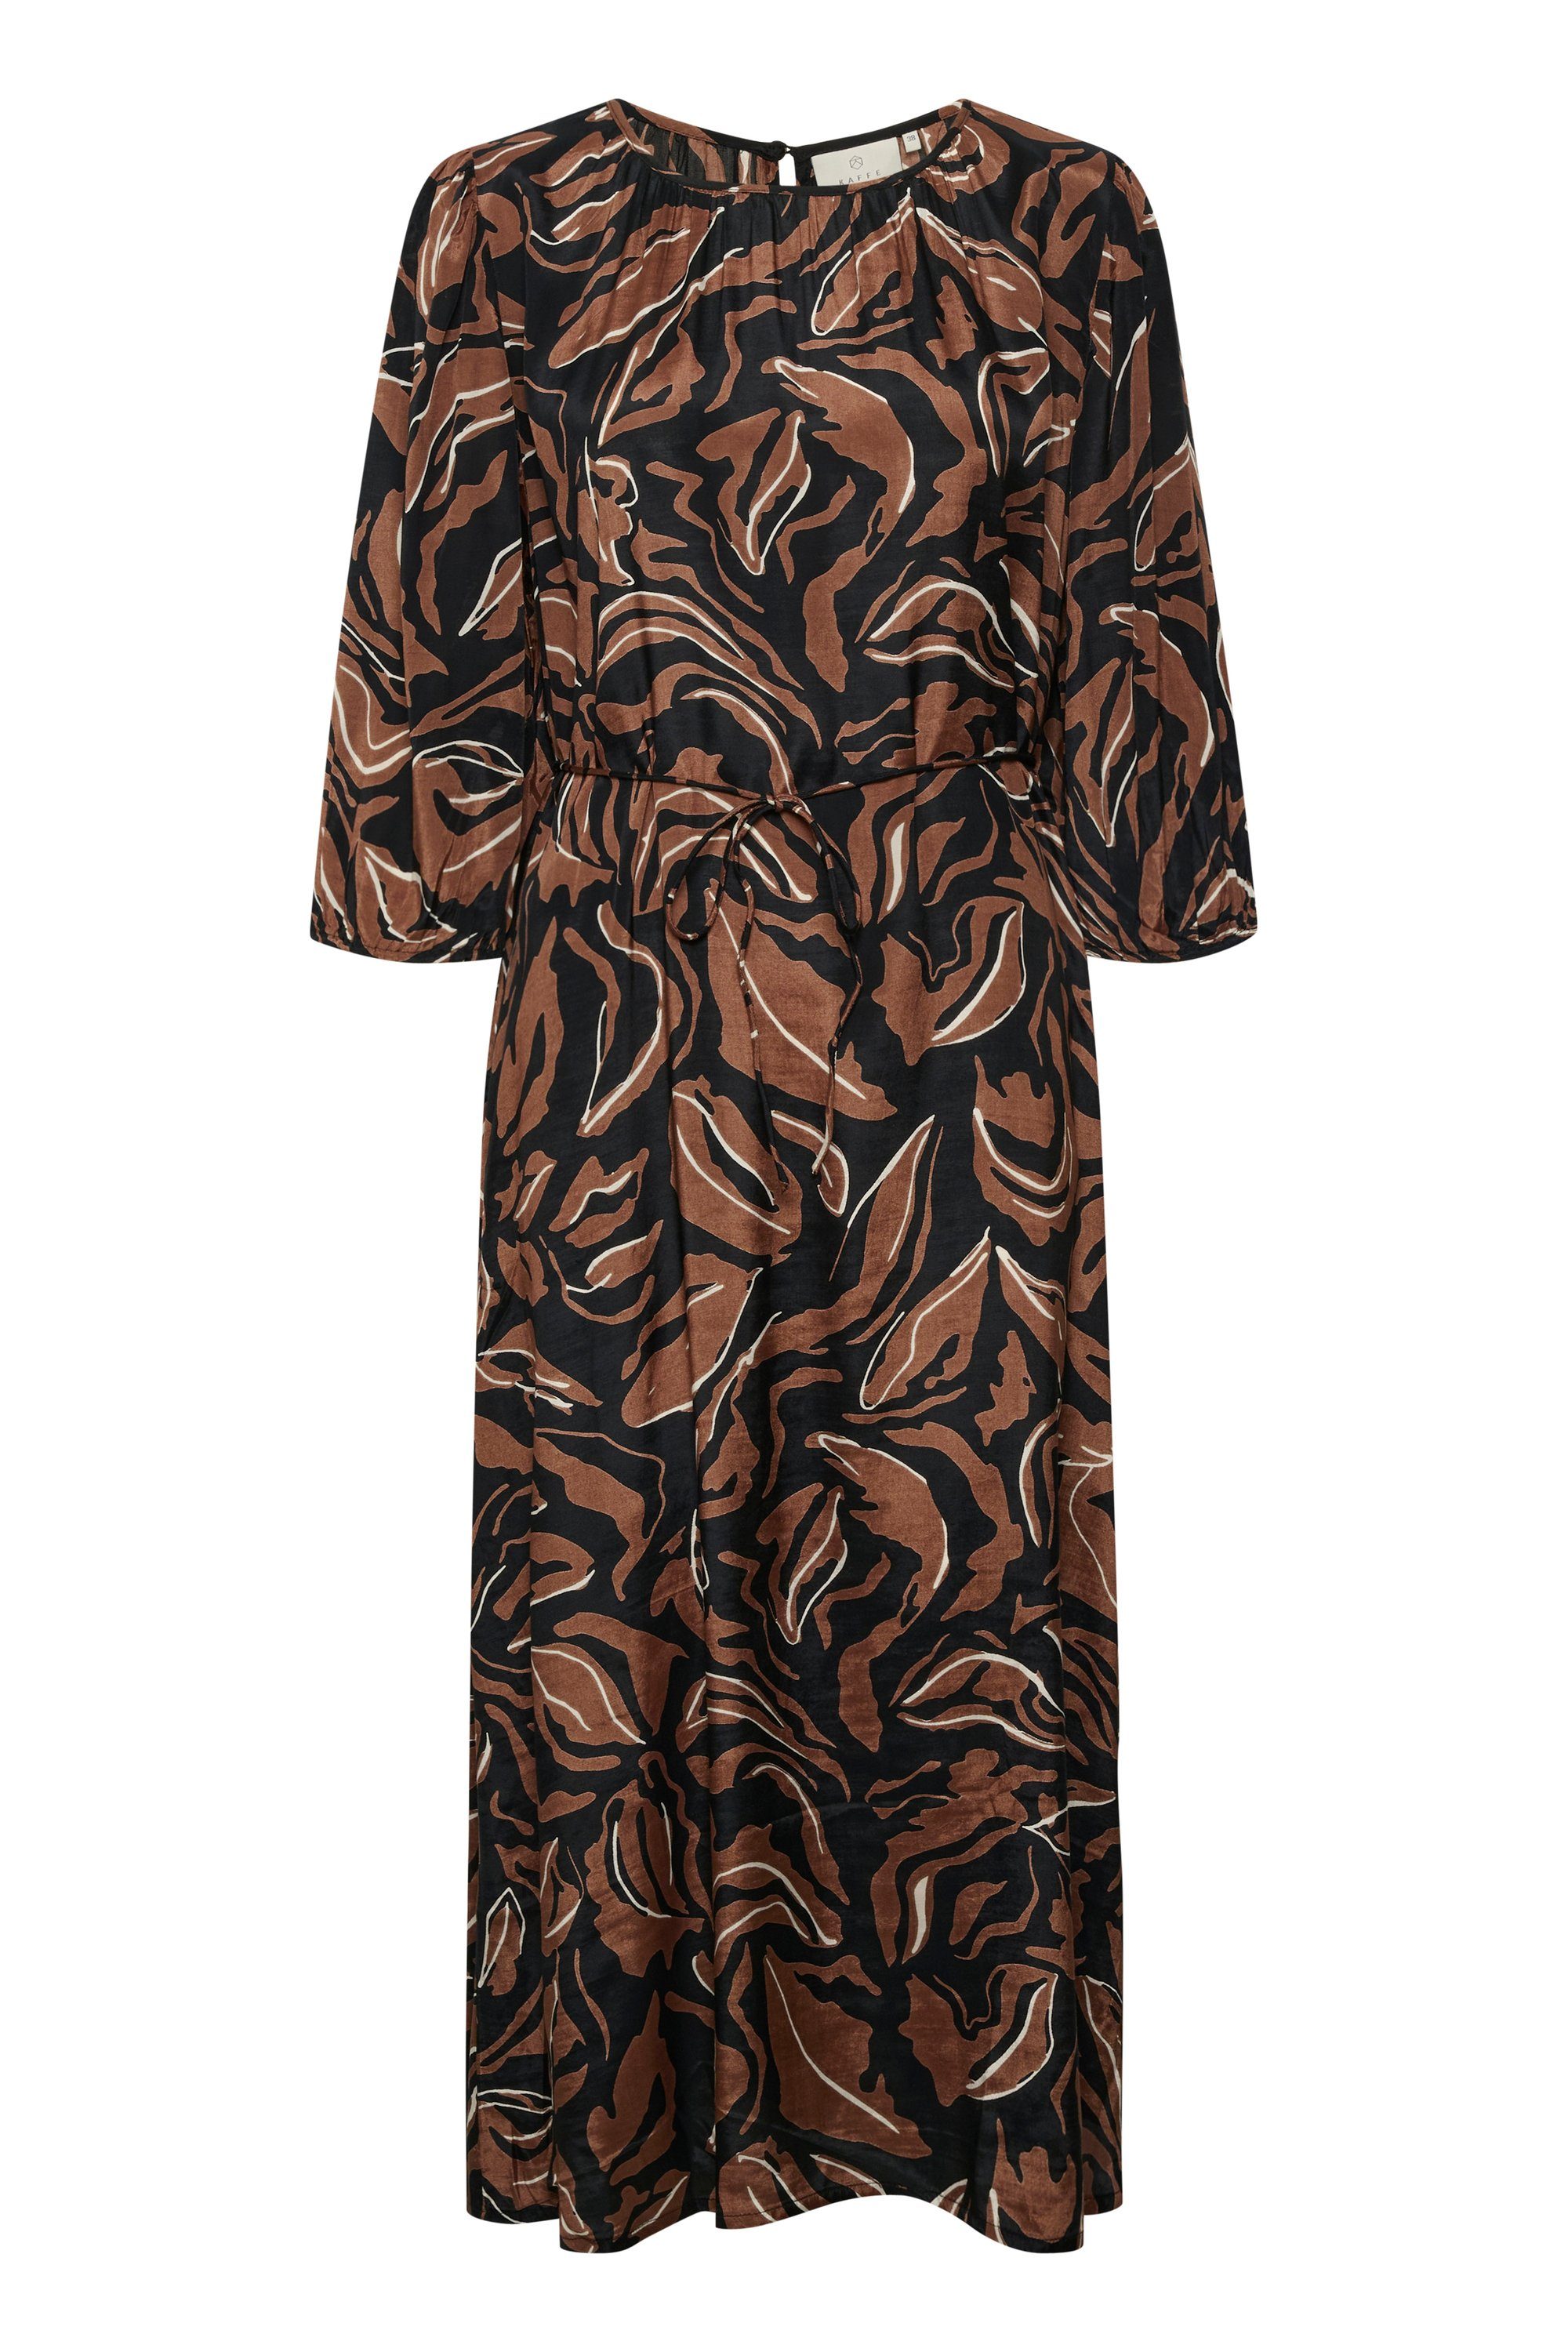 KAFFE Jerseykleid Kleid KAdorita Black/Soft Silt Leaf Print